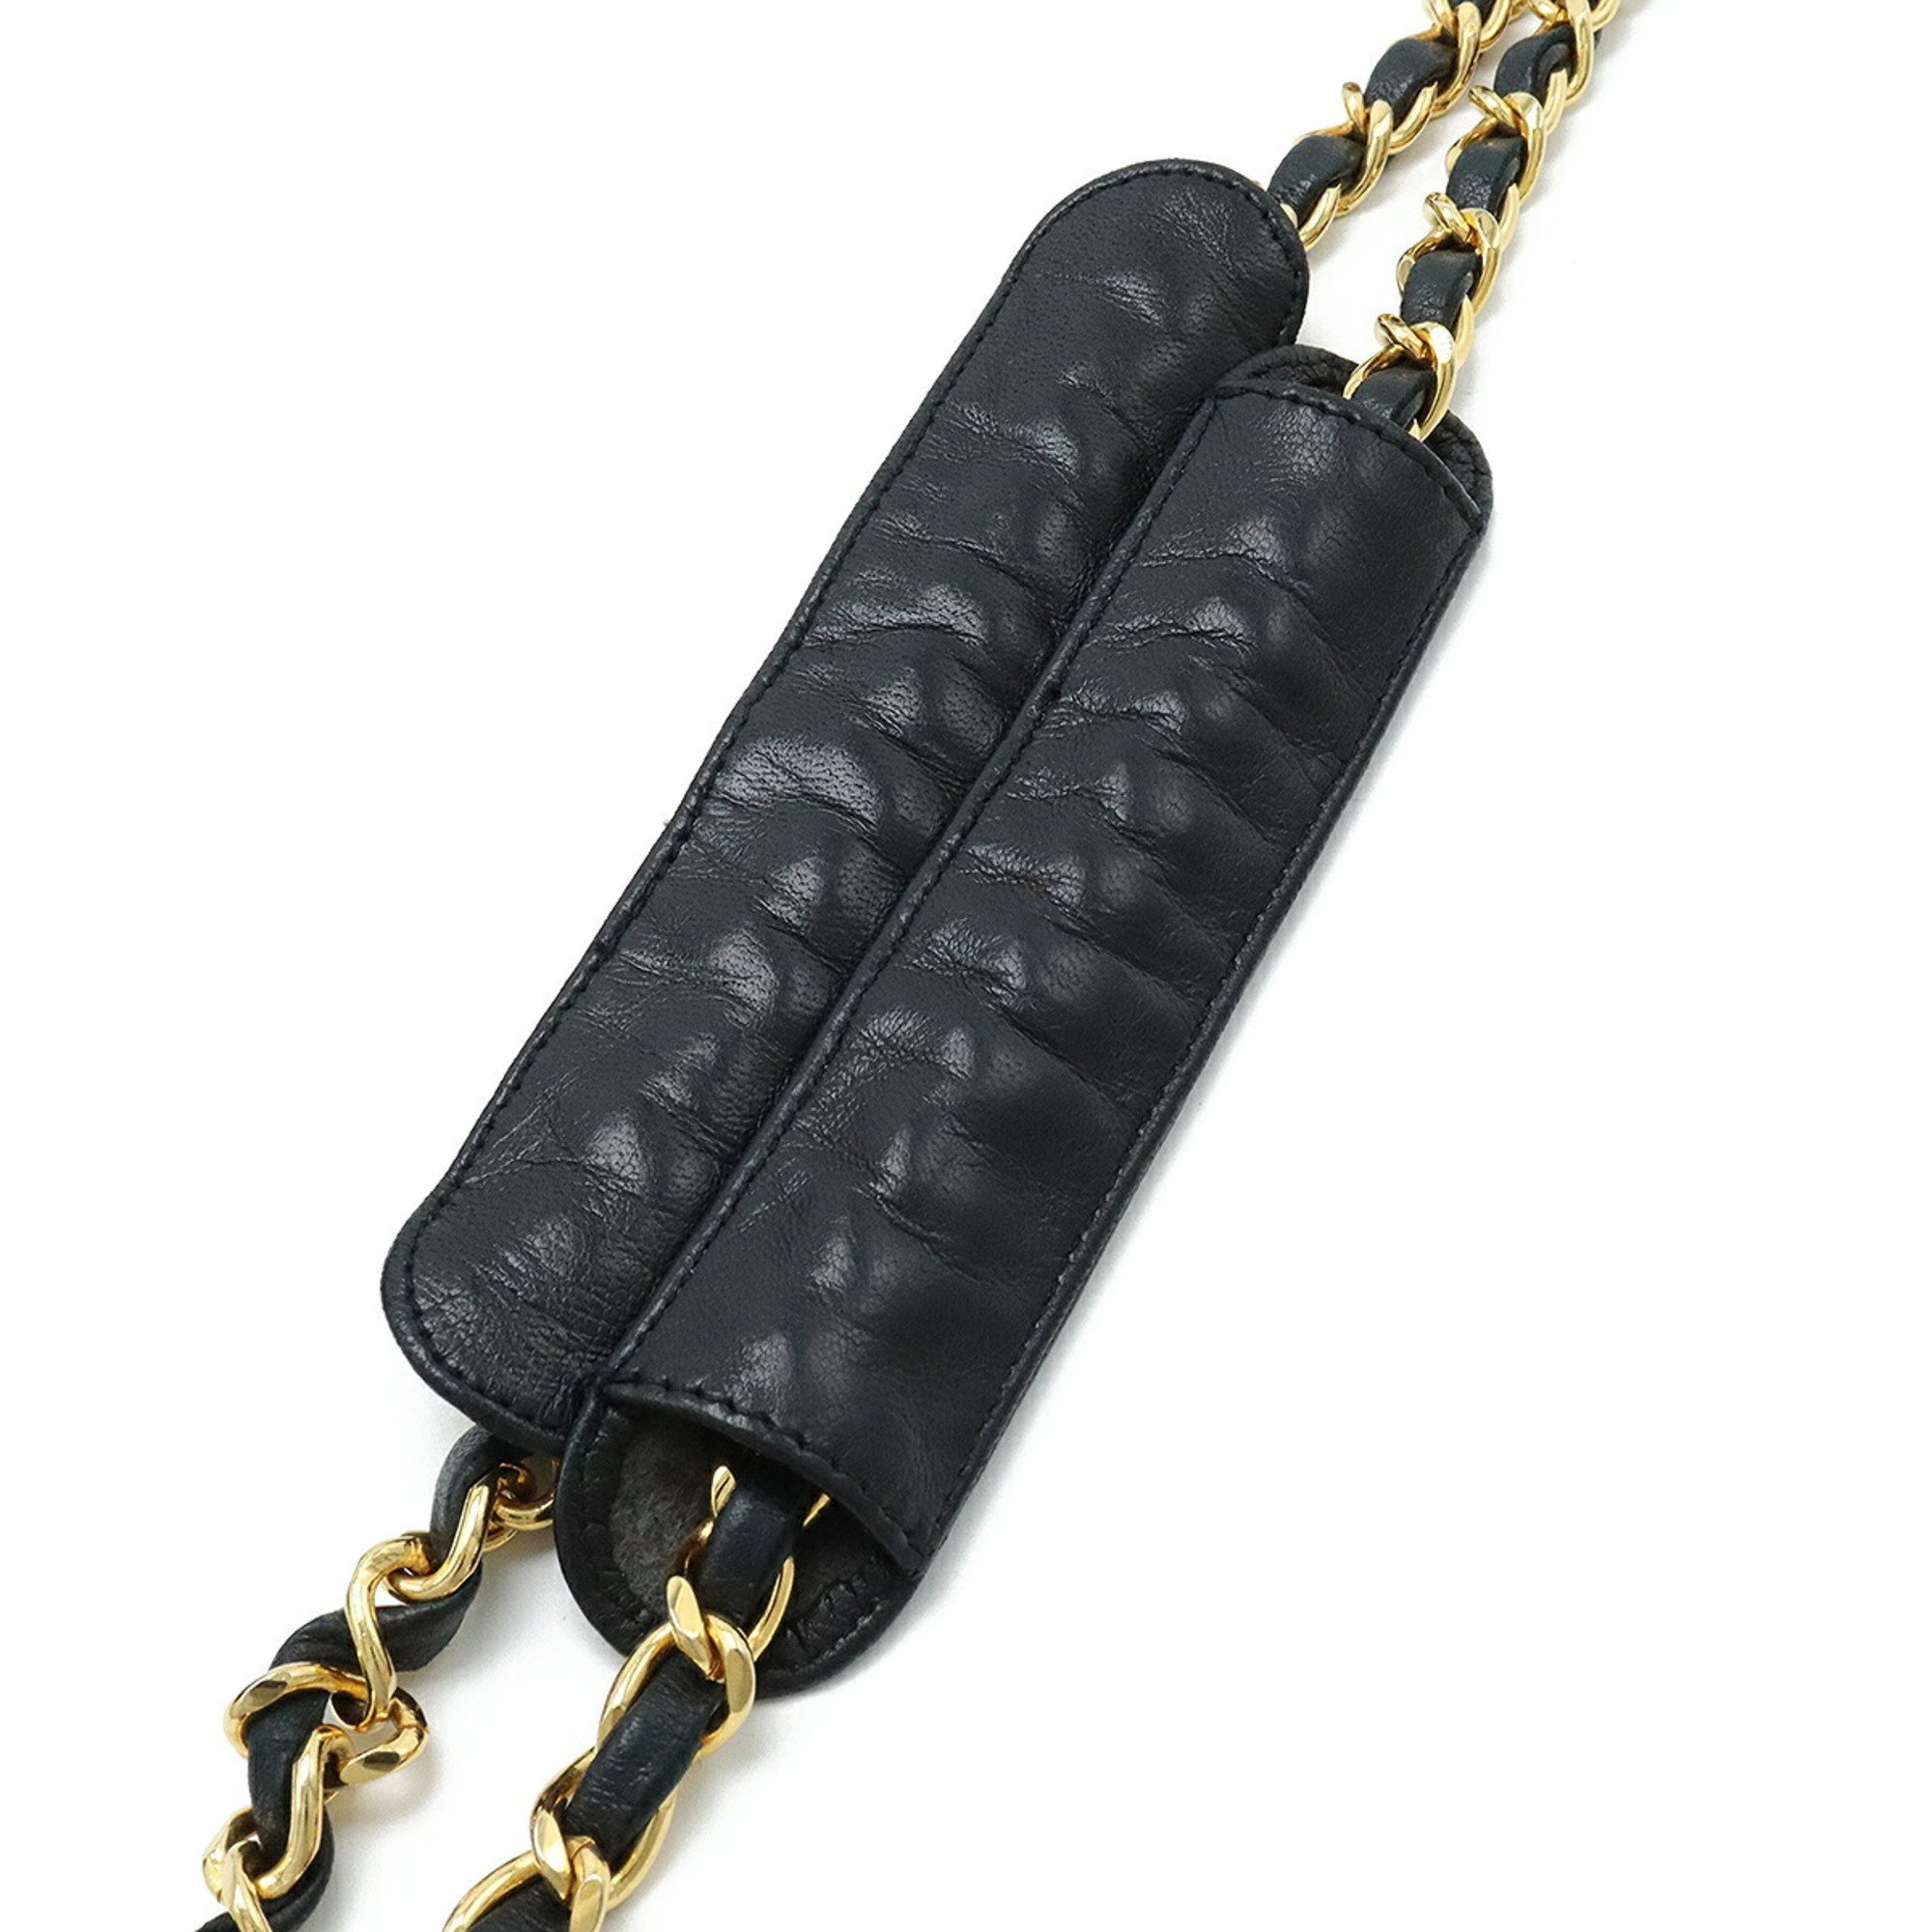 CHANEL Chanel Matelasse Chain Bag Tote Shoulder Leather Black